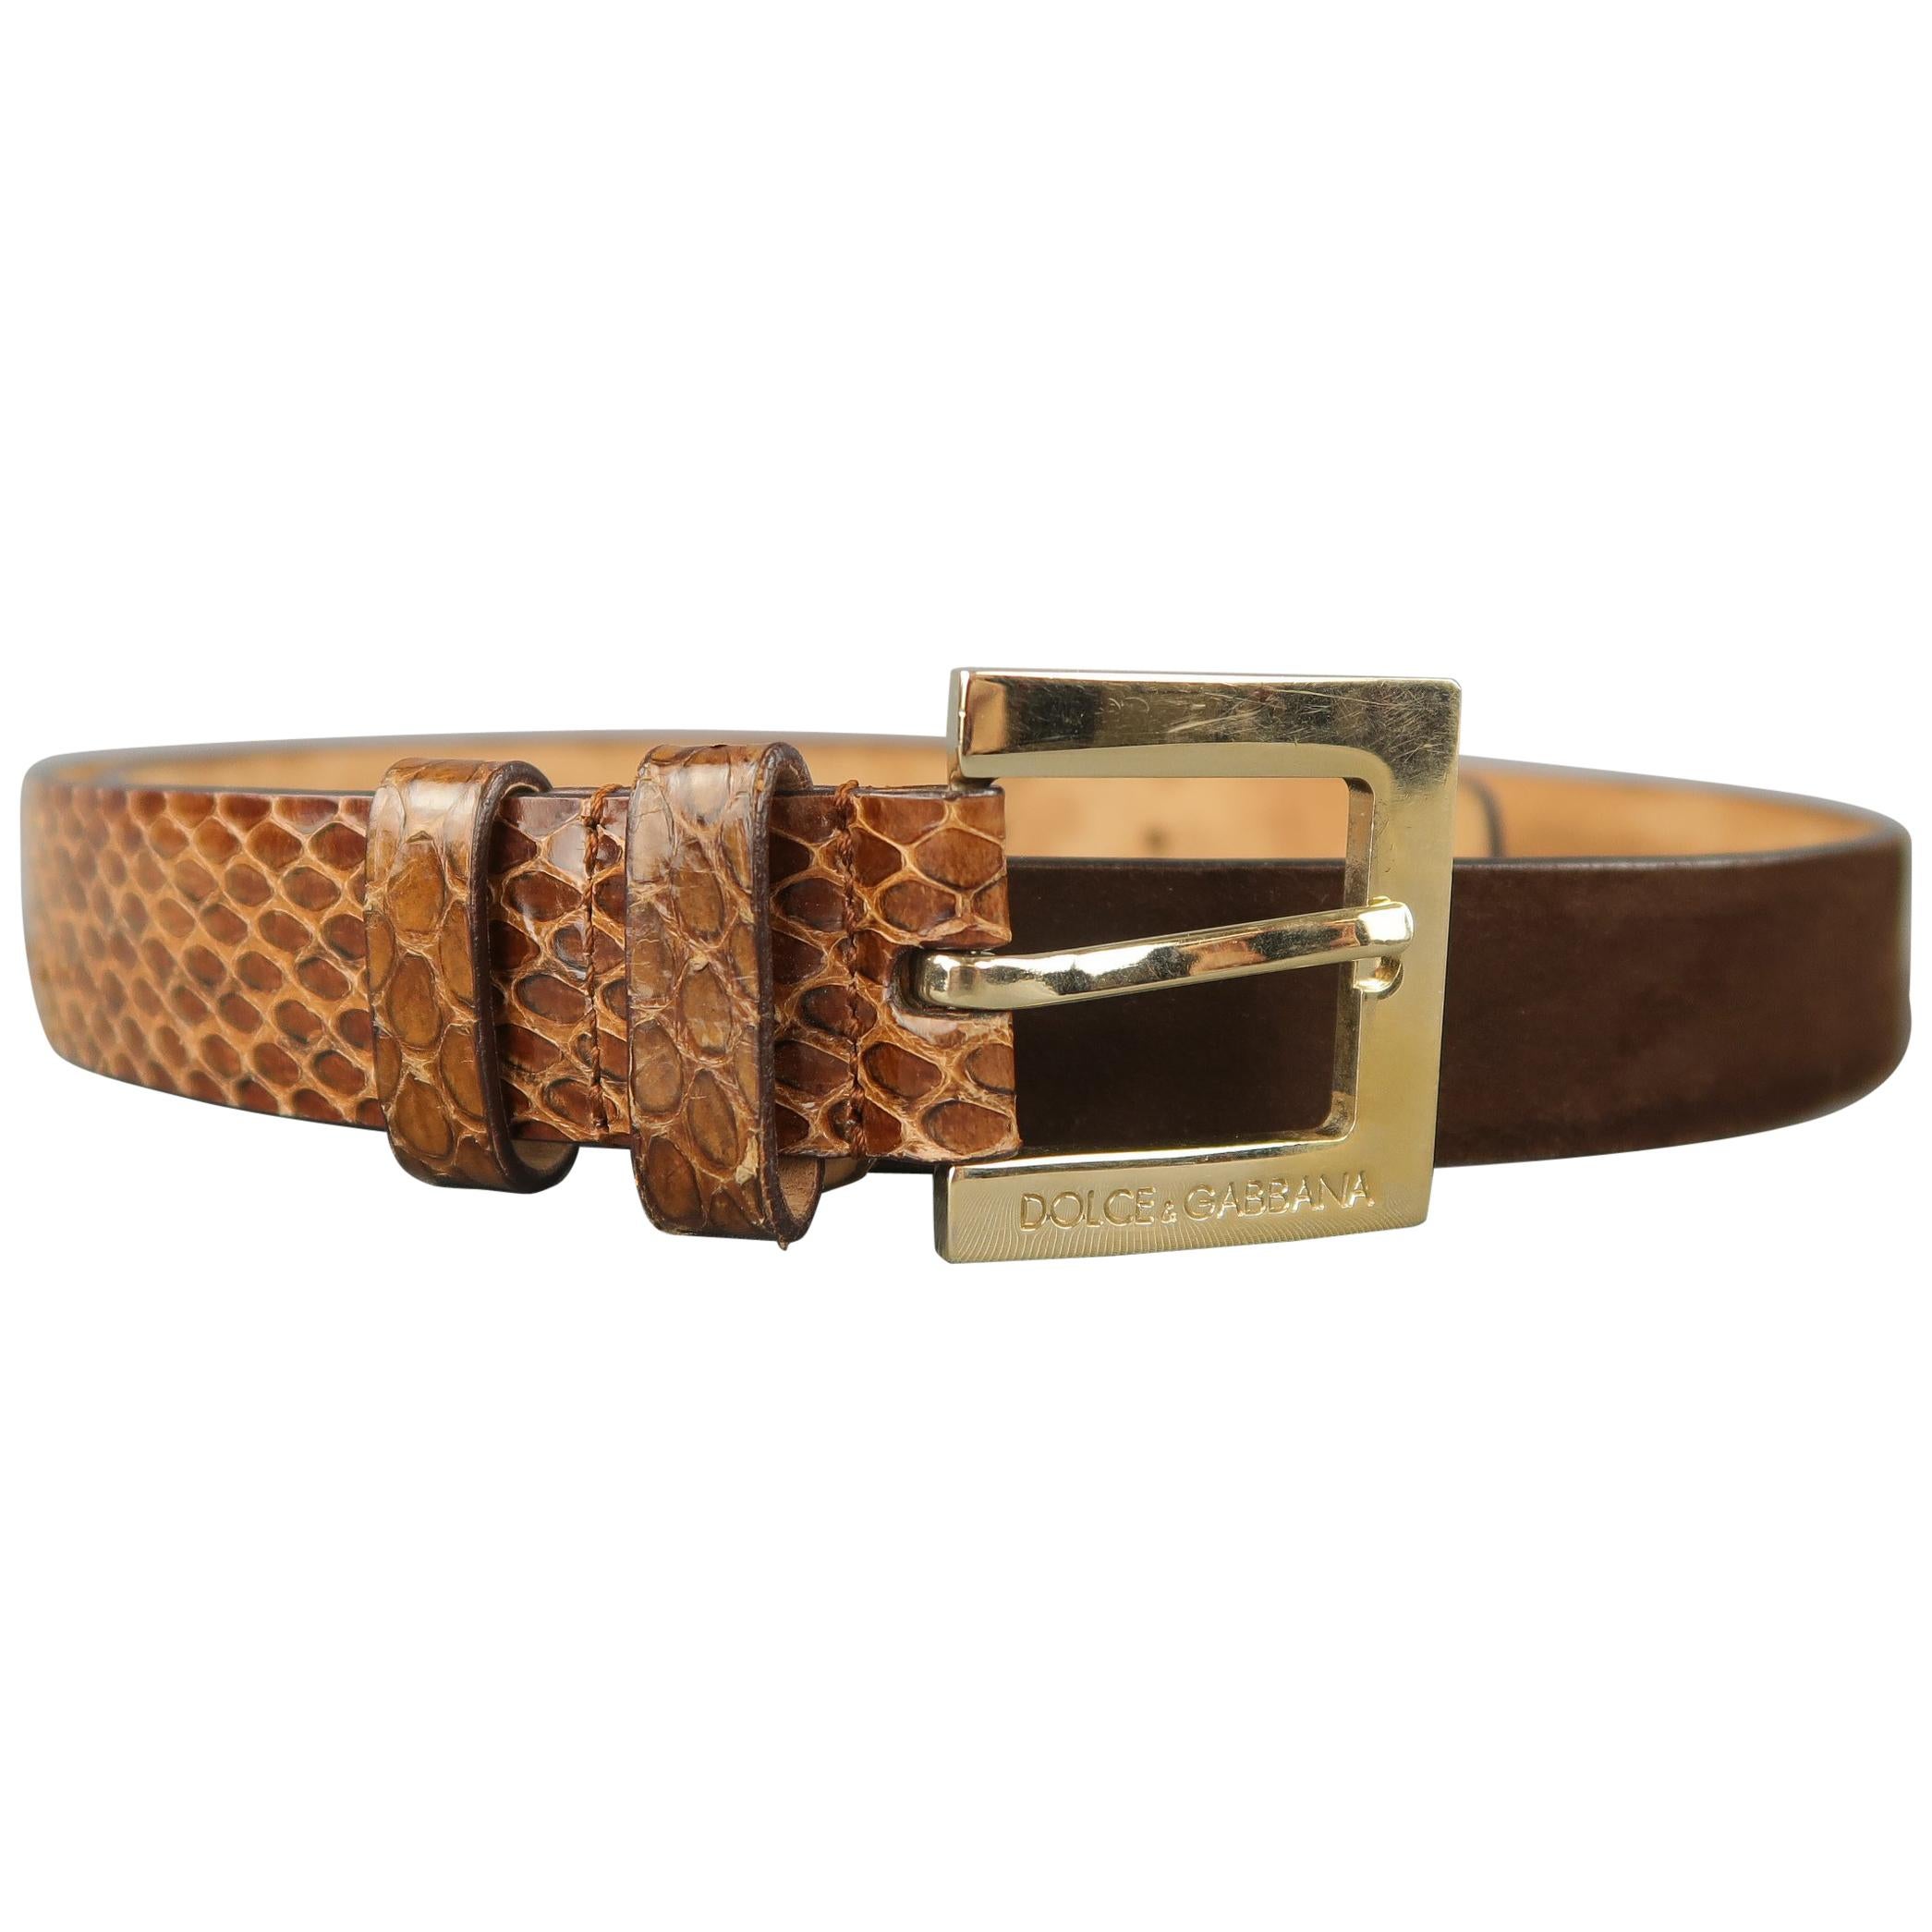 DOLCE & GABBANA Size 36 Brown Suede & Snakeskin Leather Belt